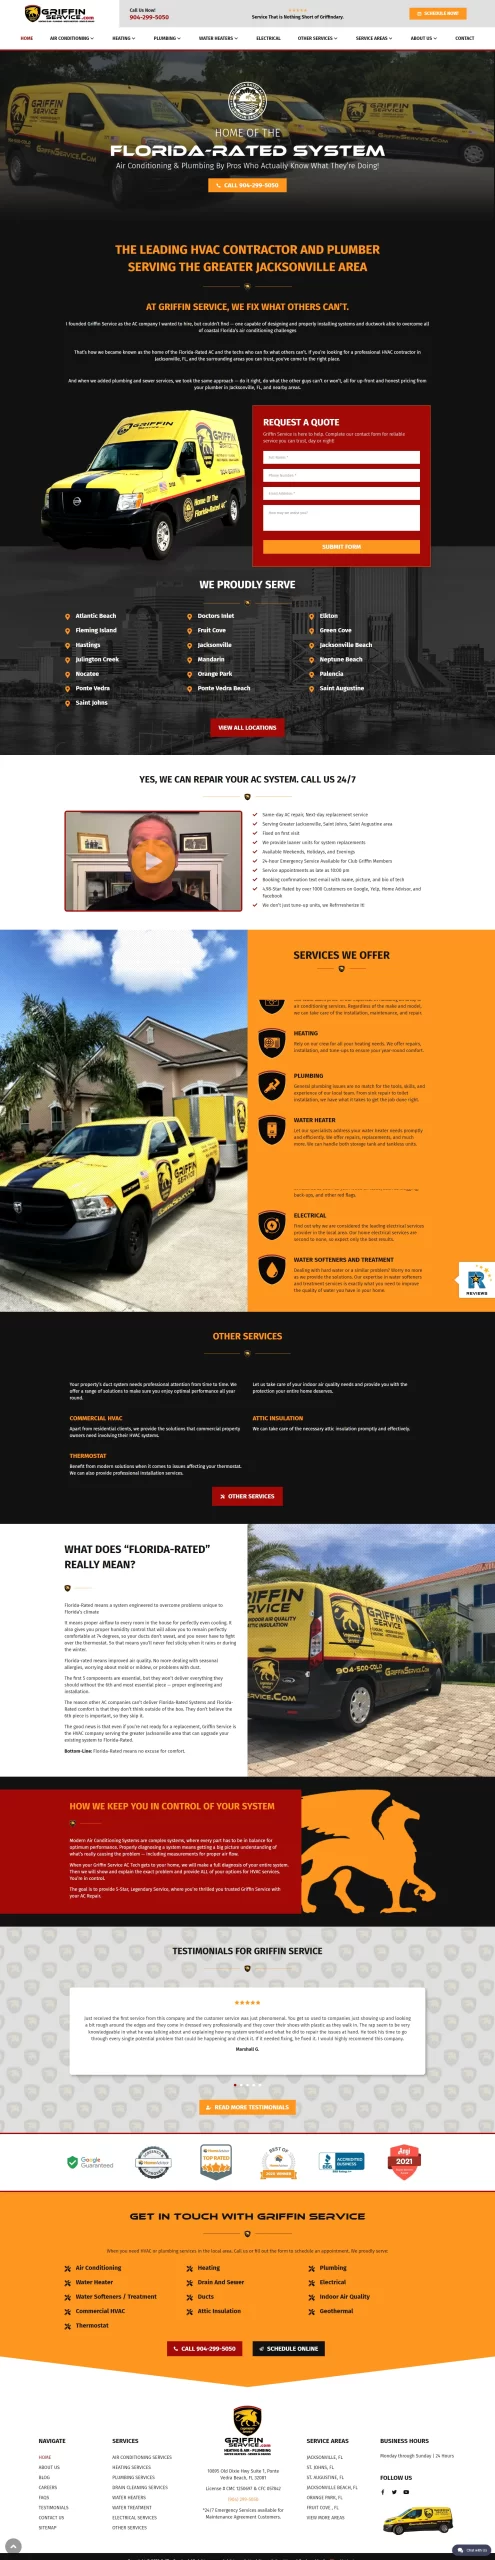 griffin service company website design